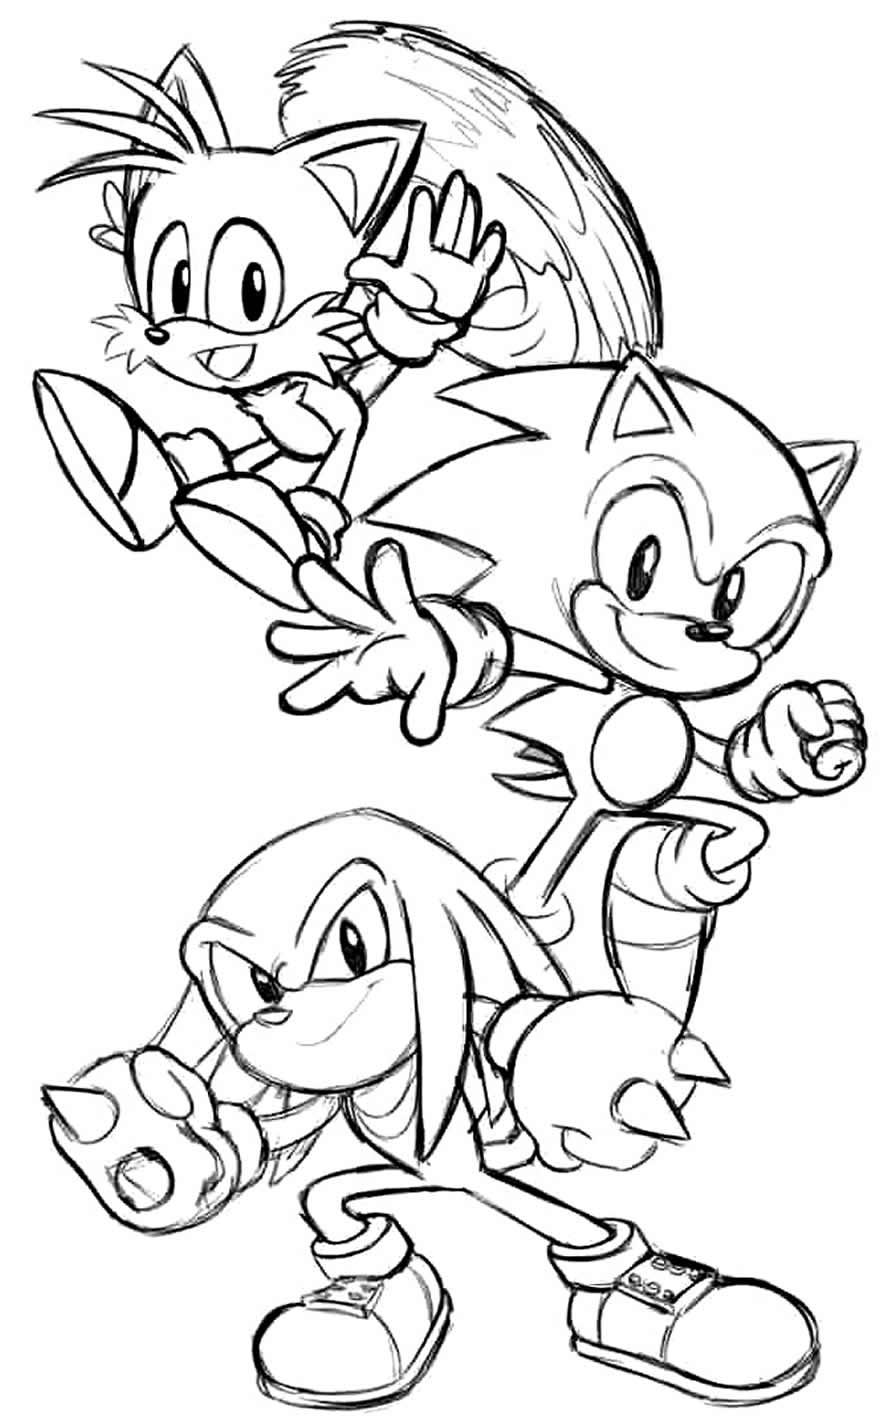 Desenho de Sonic para colorir